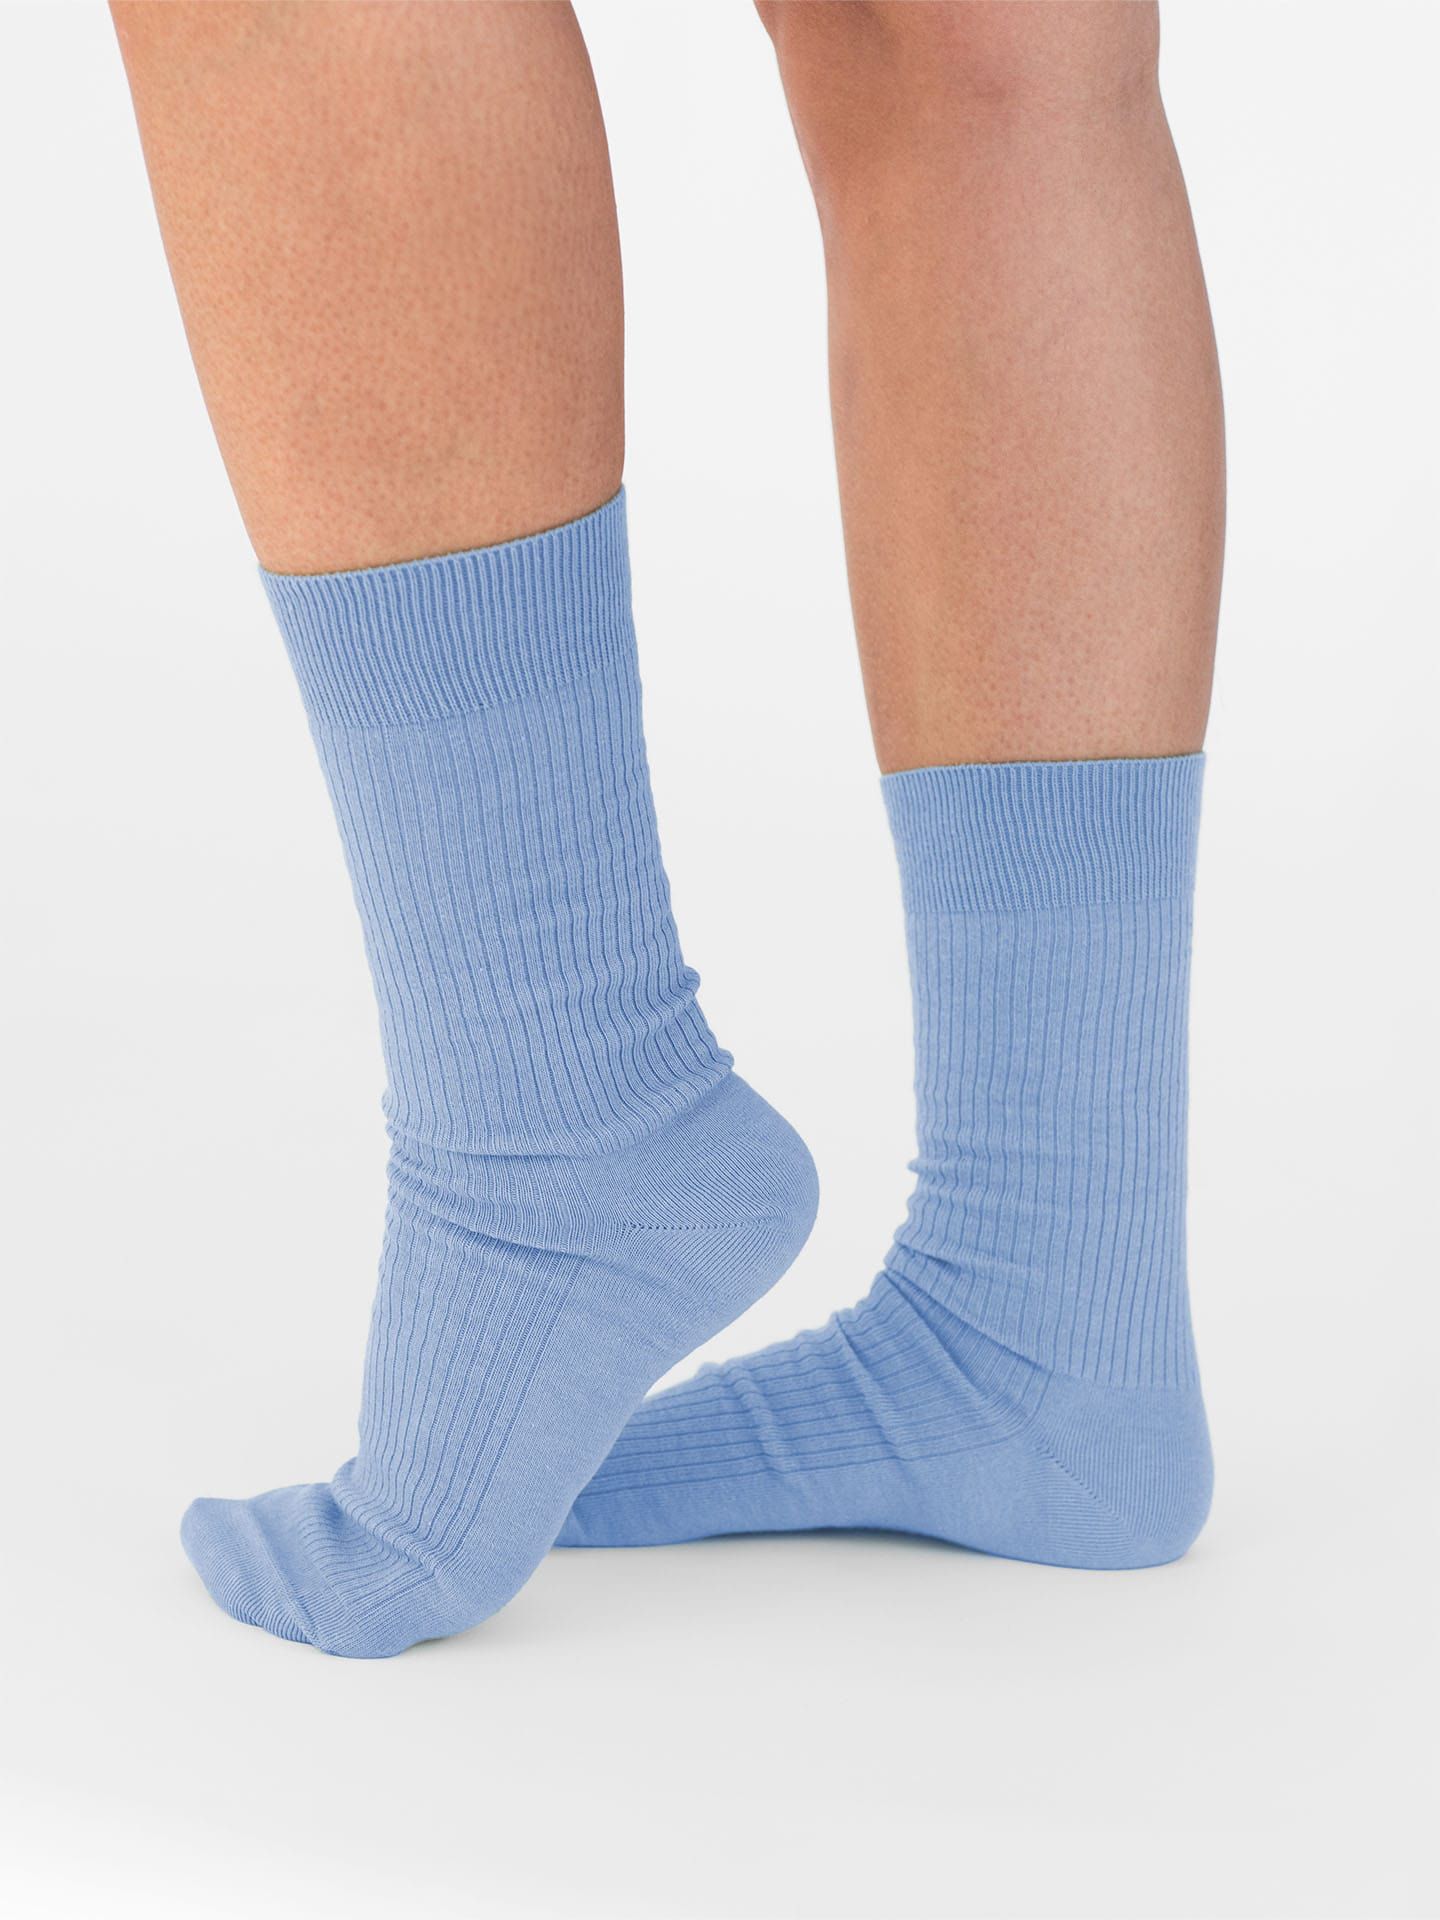 Casual Cotton Gerippte Socken im 3er Pack himmelblau 39-42